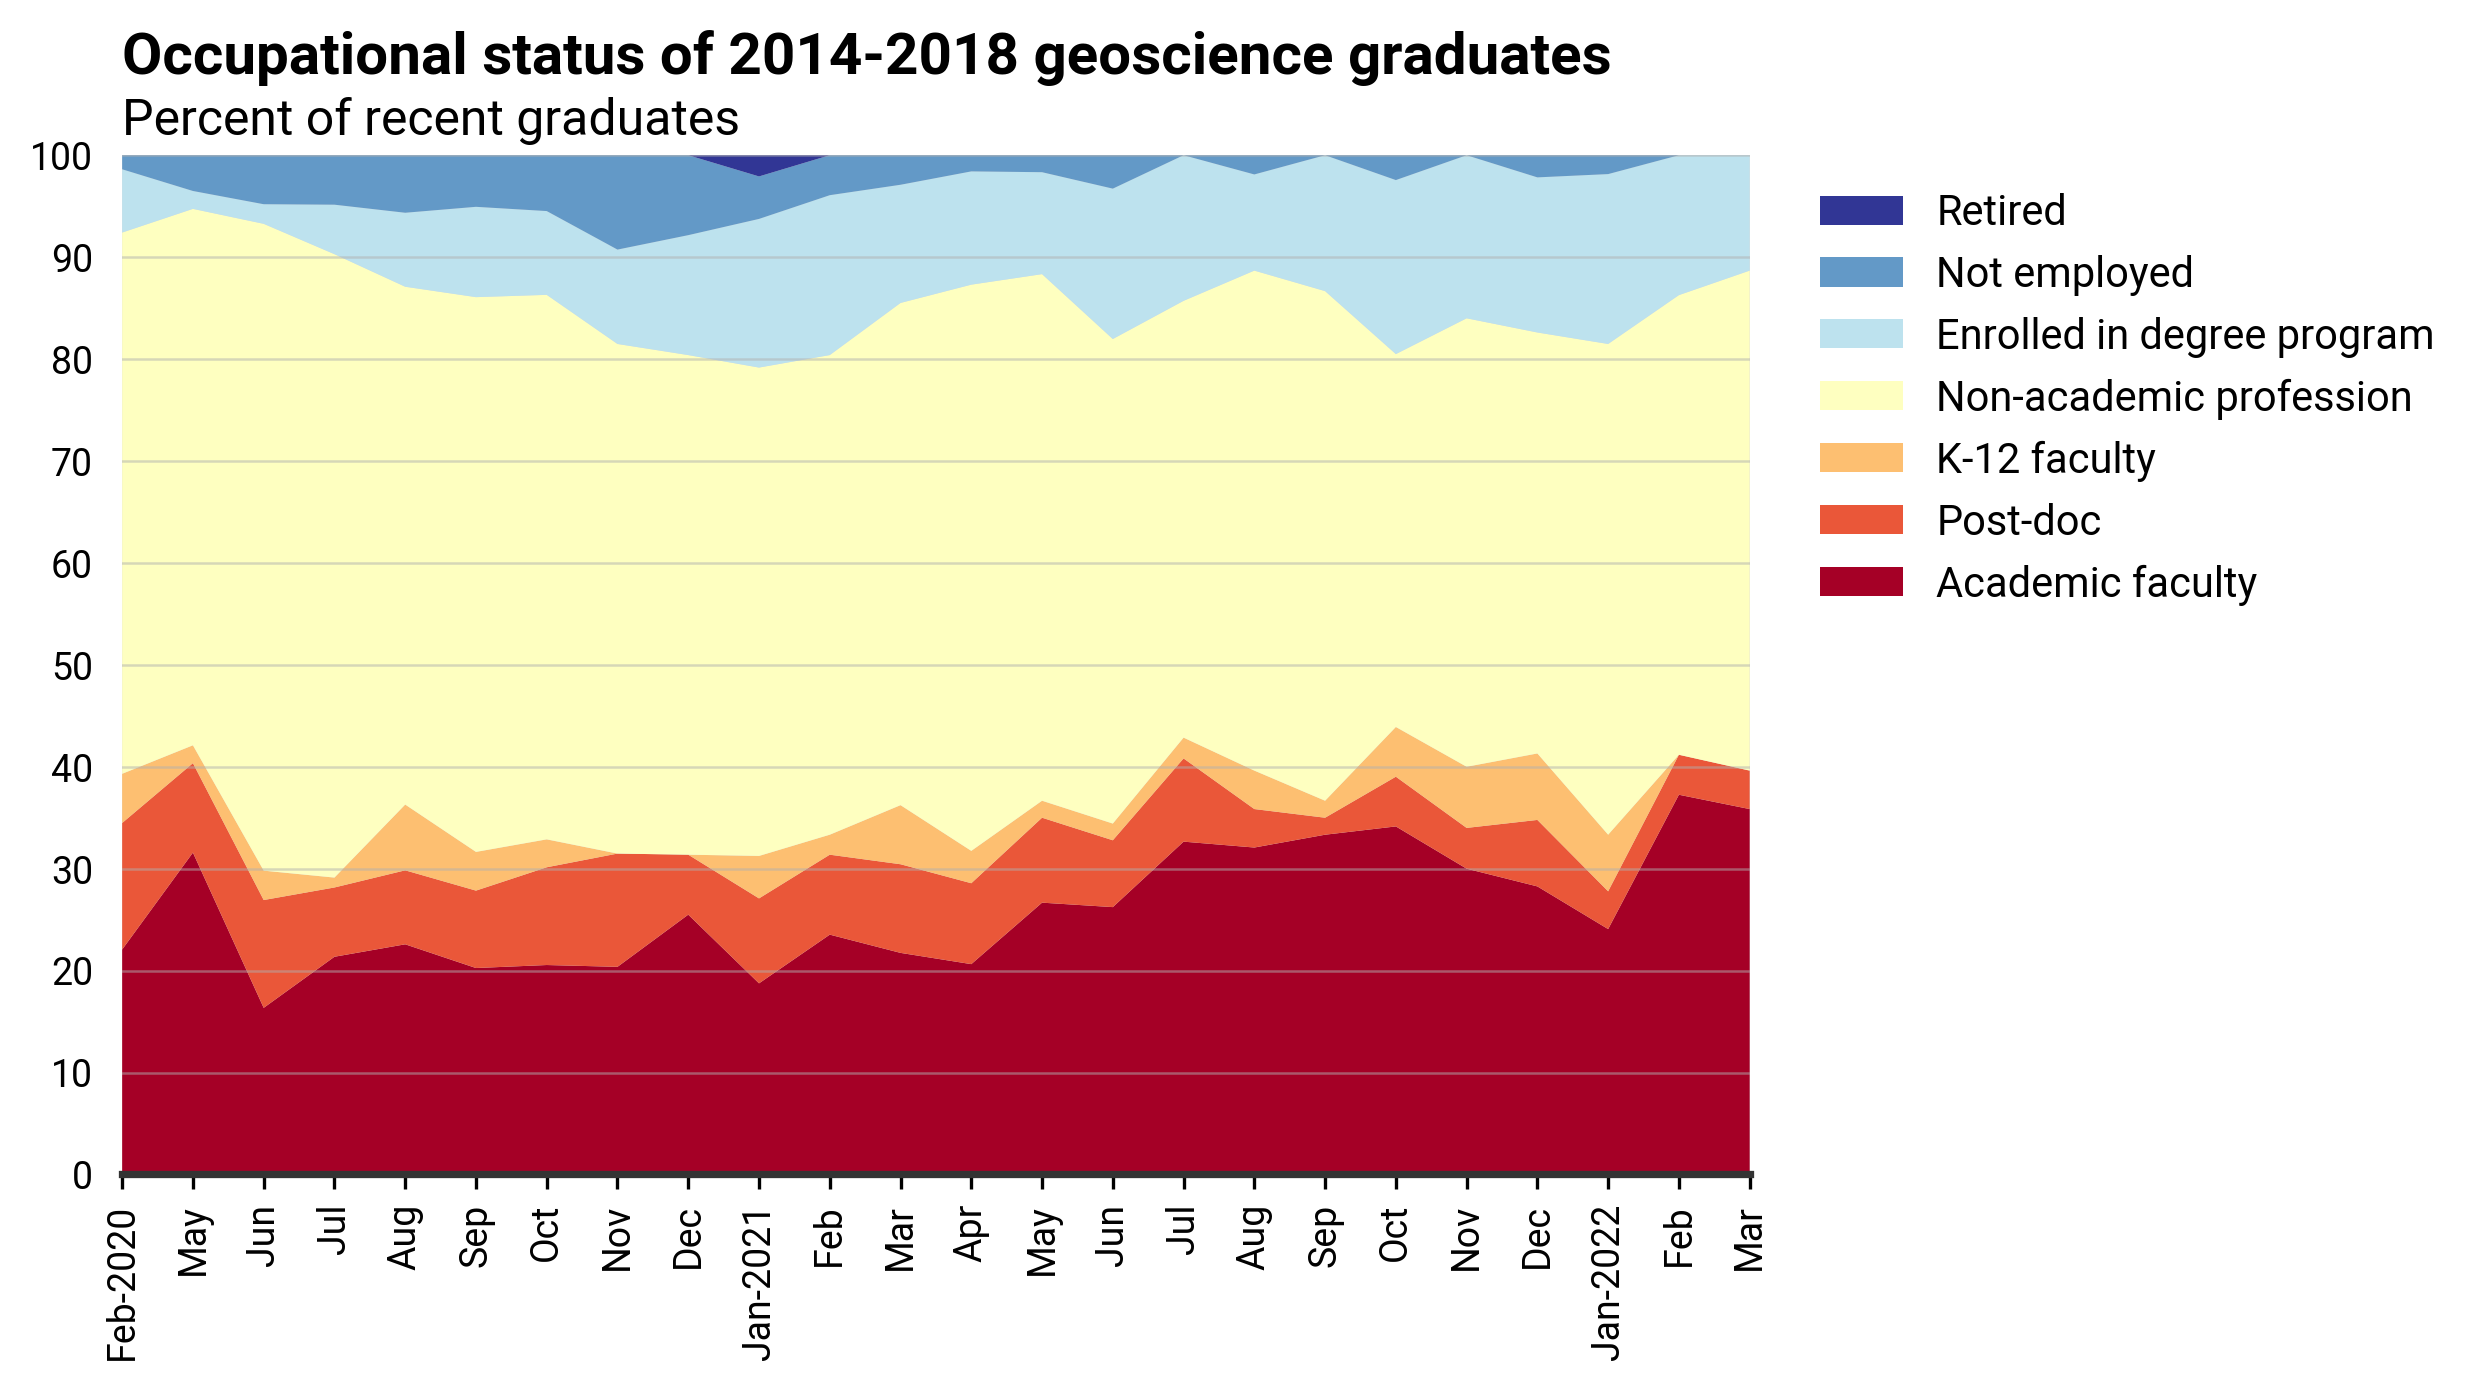 DB_2022-005 chart 02: Occupational status of 2014-2018 geoscience graduates (Credit: AGI; data from AGI&#039;s Geoscience COVID-19 Survey)